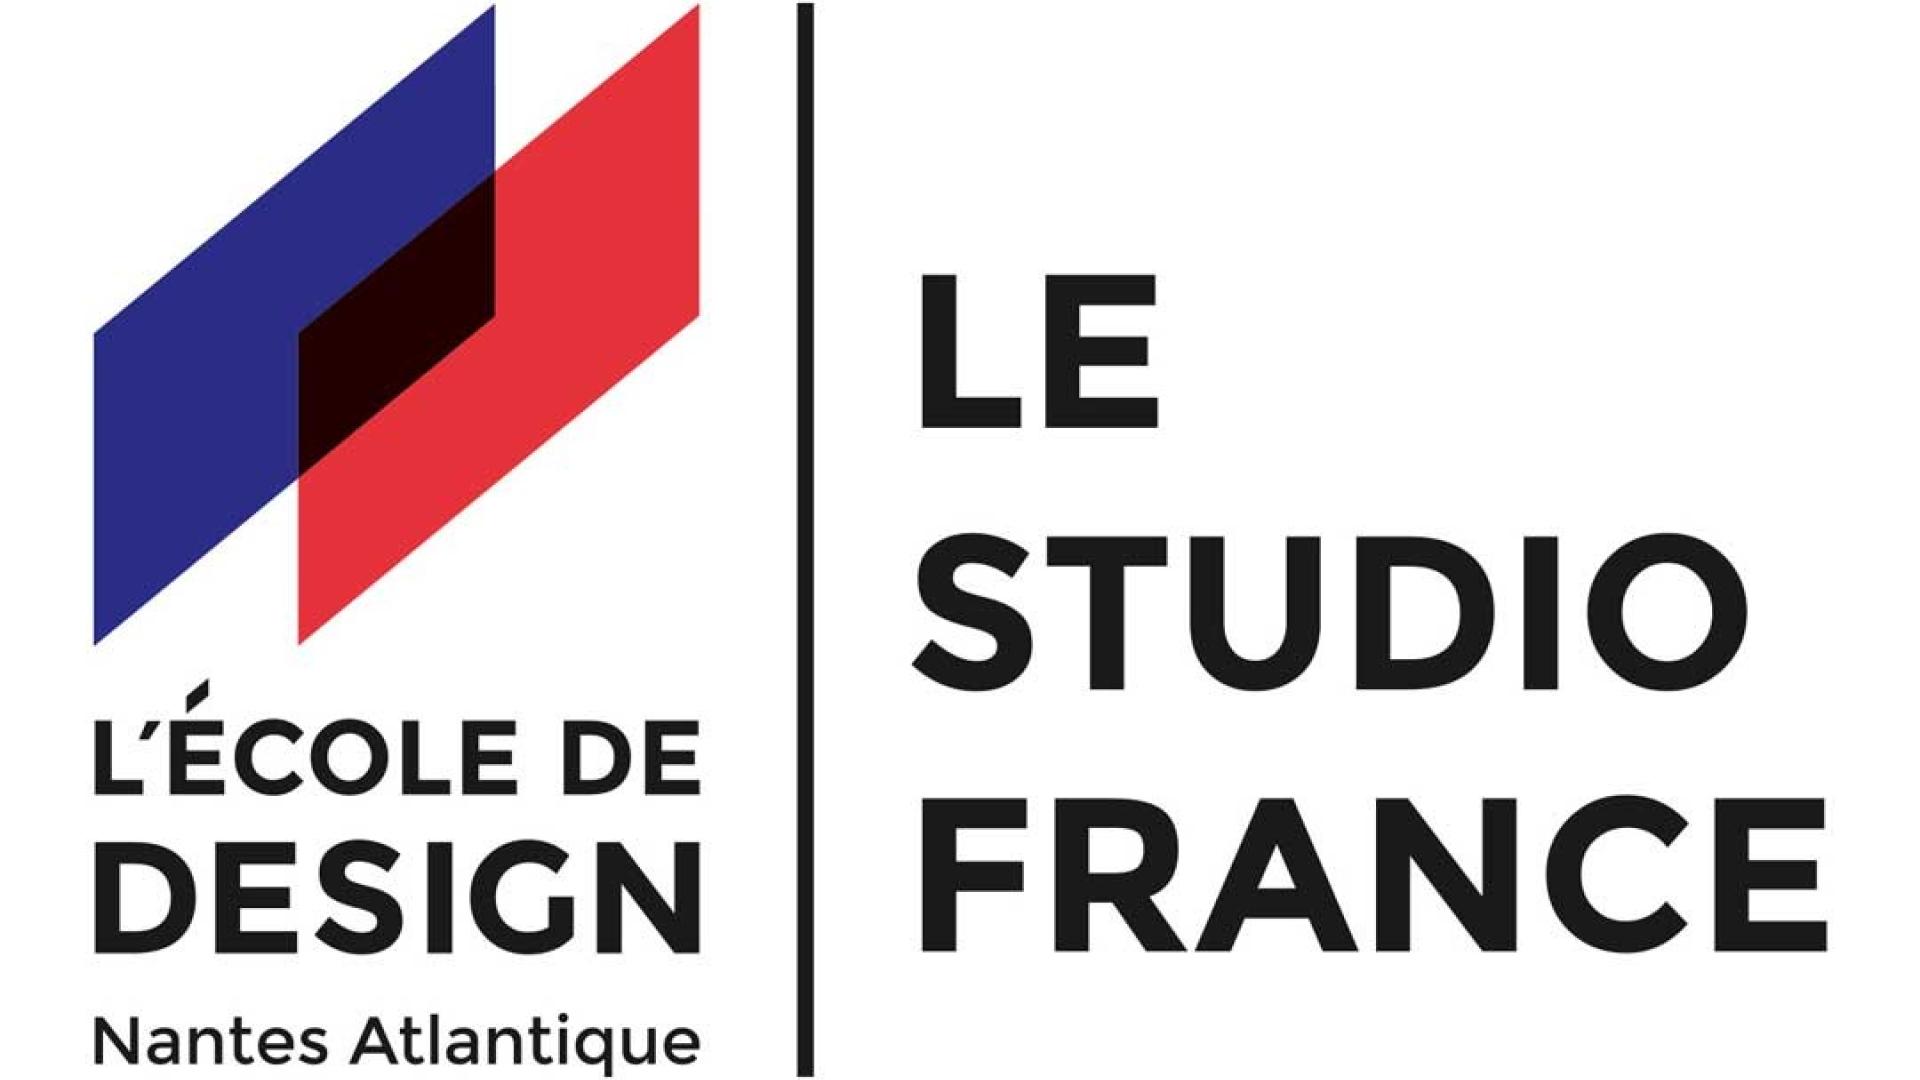 Poster Le Sudio France of the Nantes Atlantique School of Design